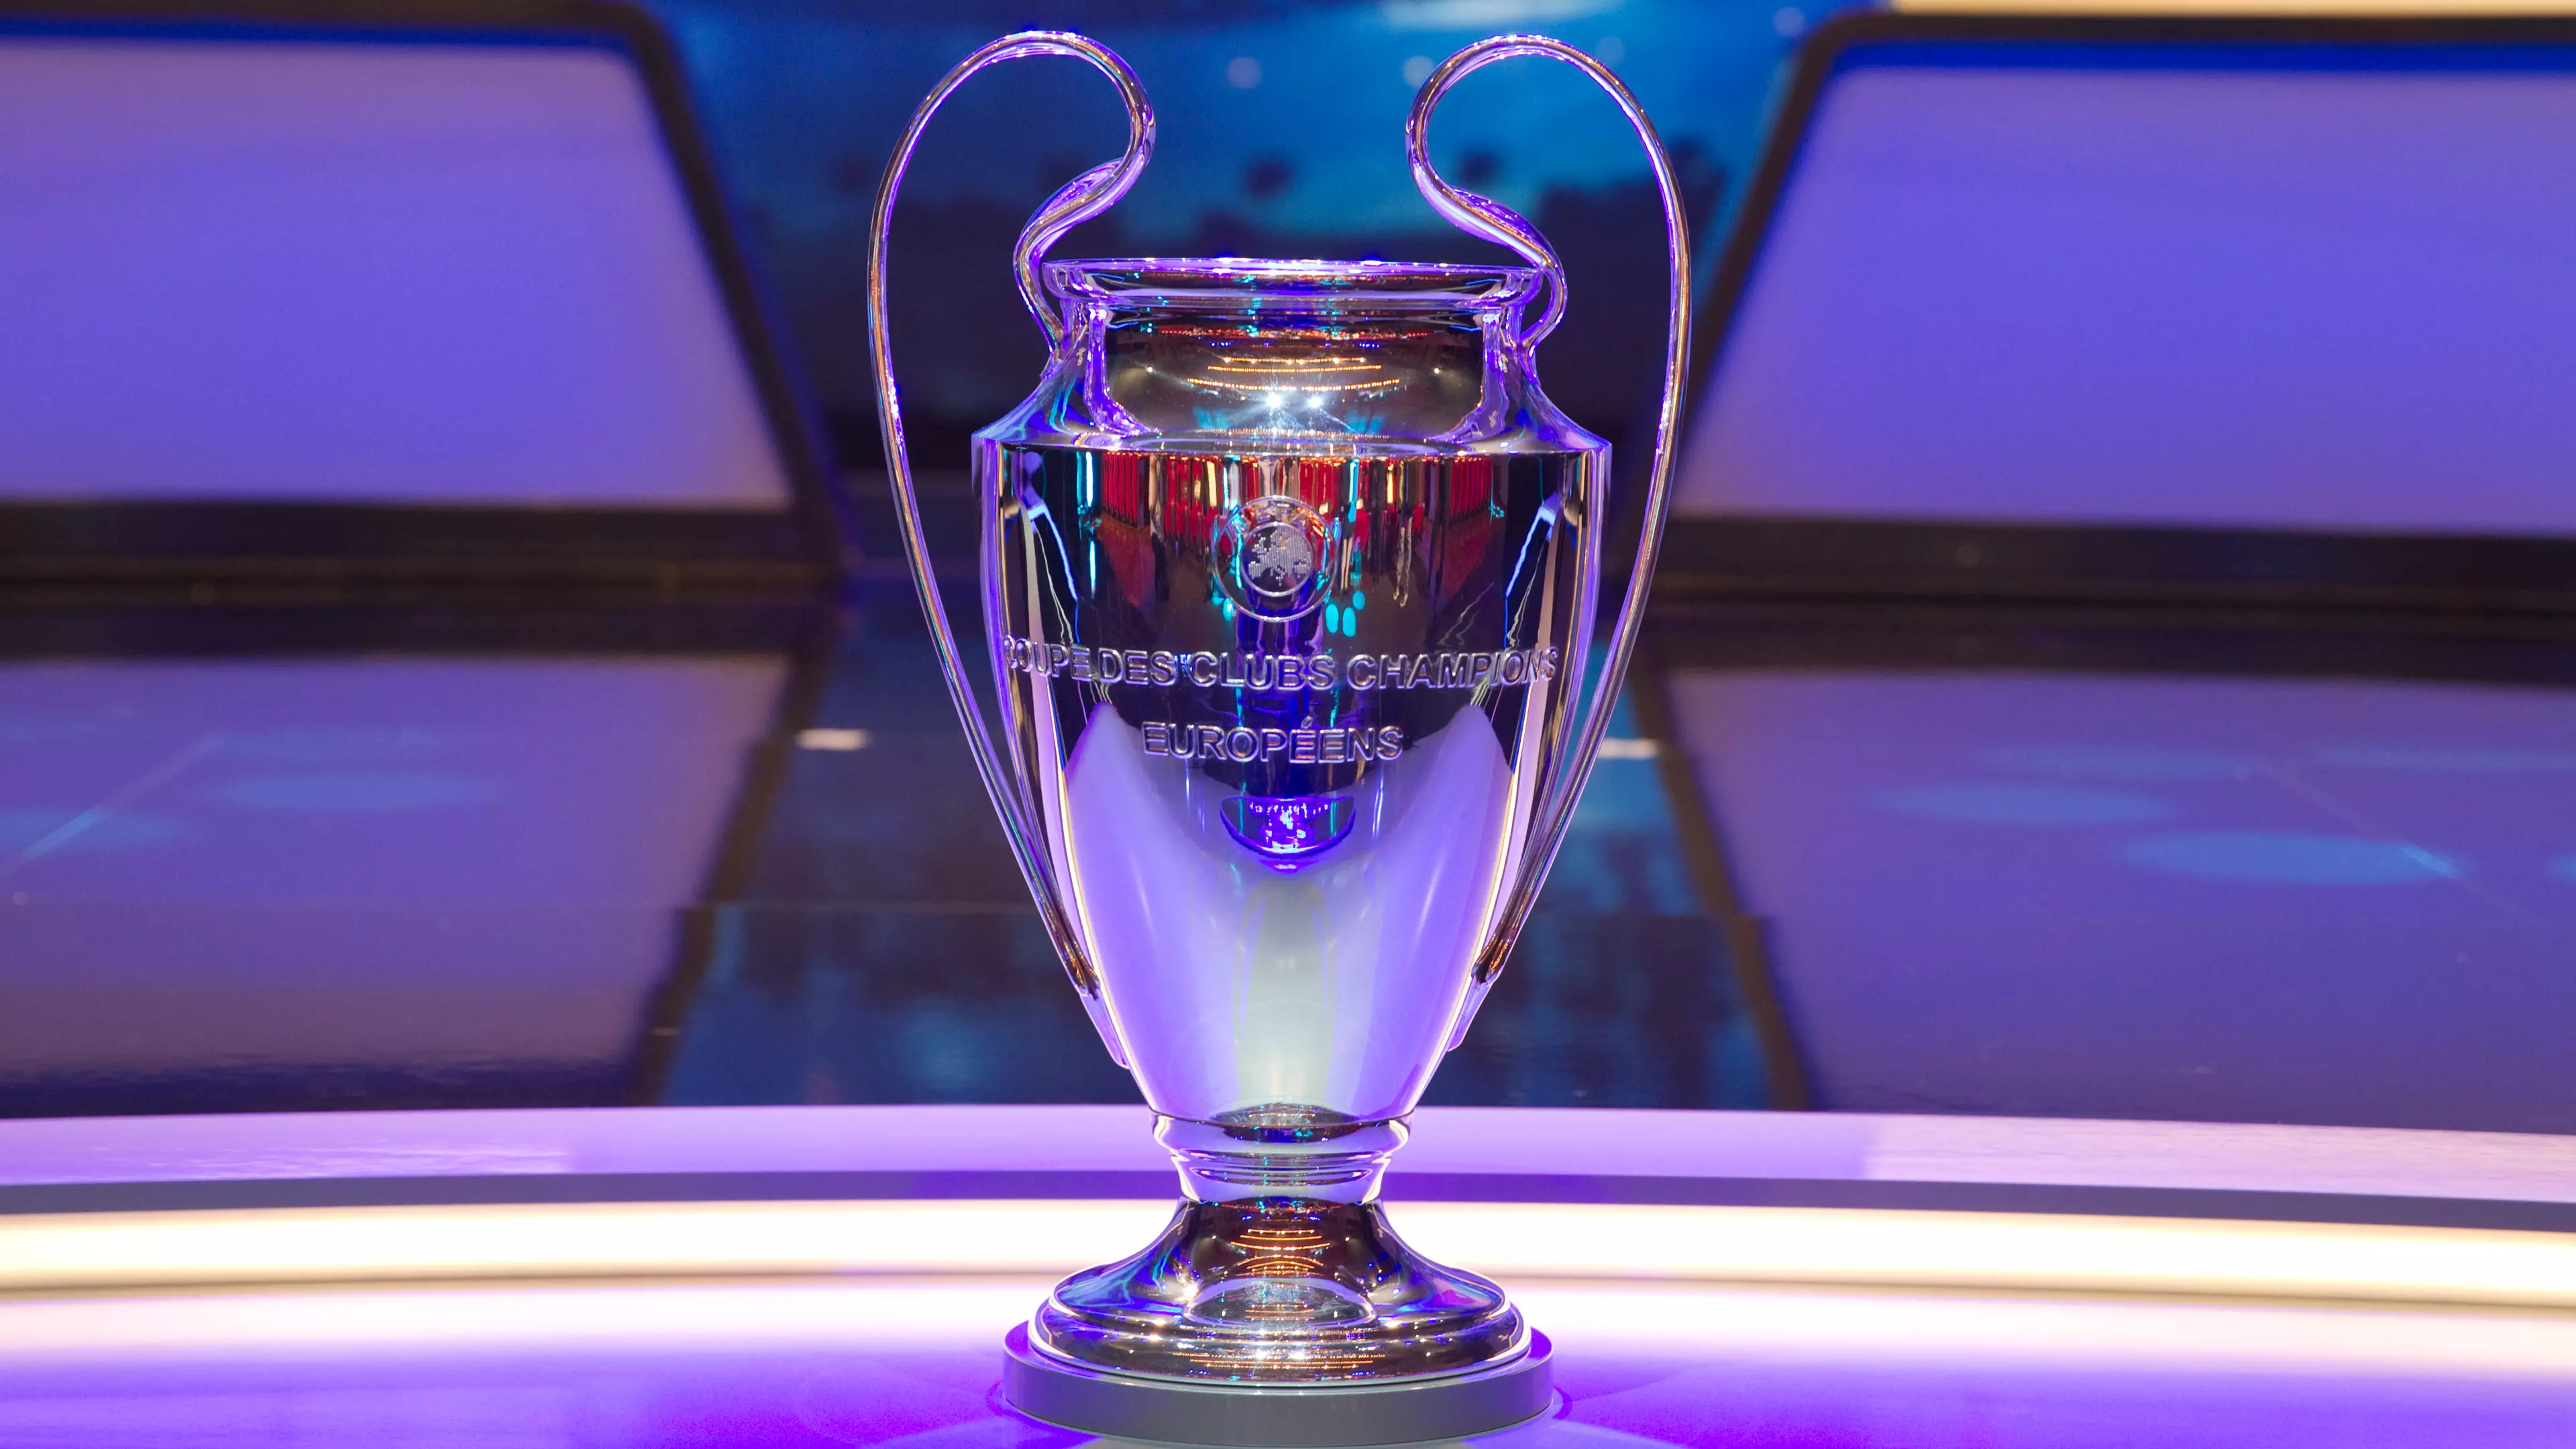 Champions League 2020/21 Last 16 Draw Announced